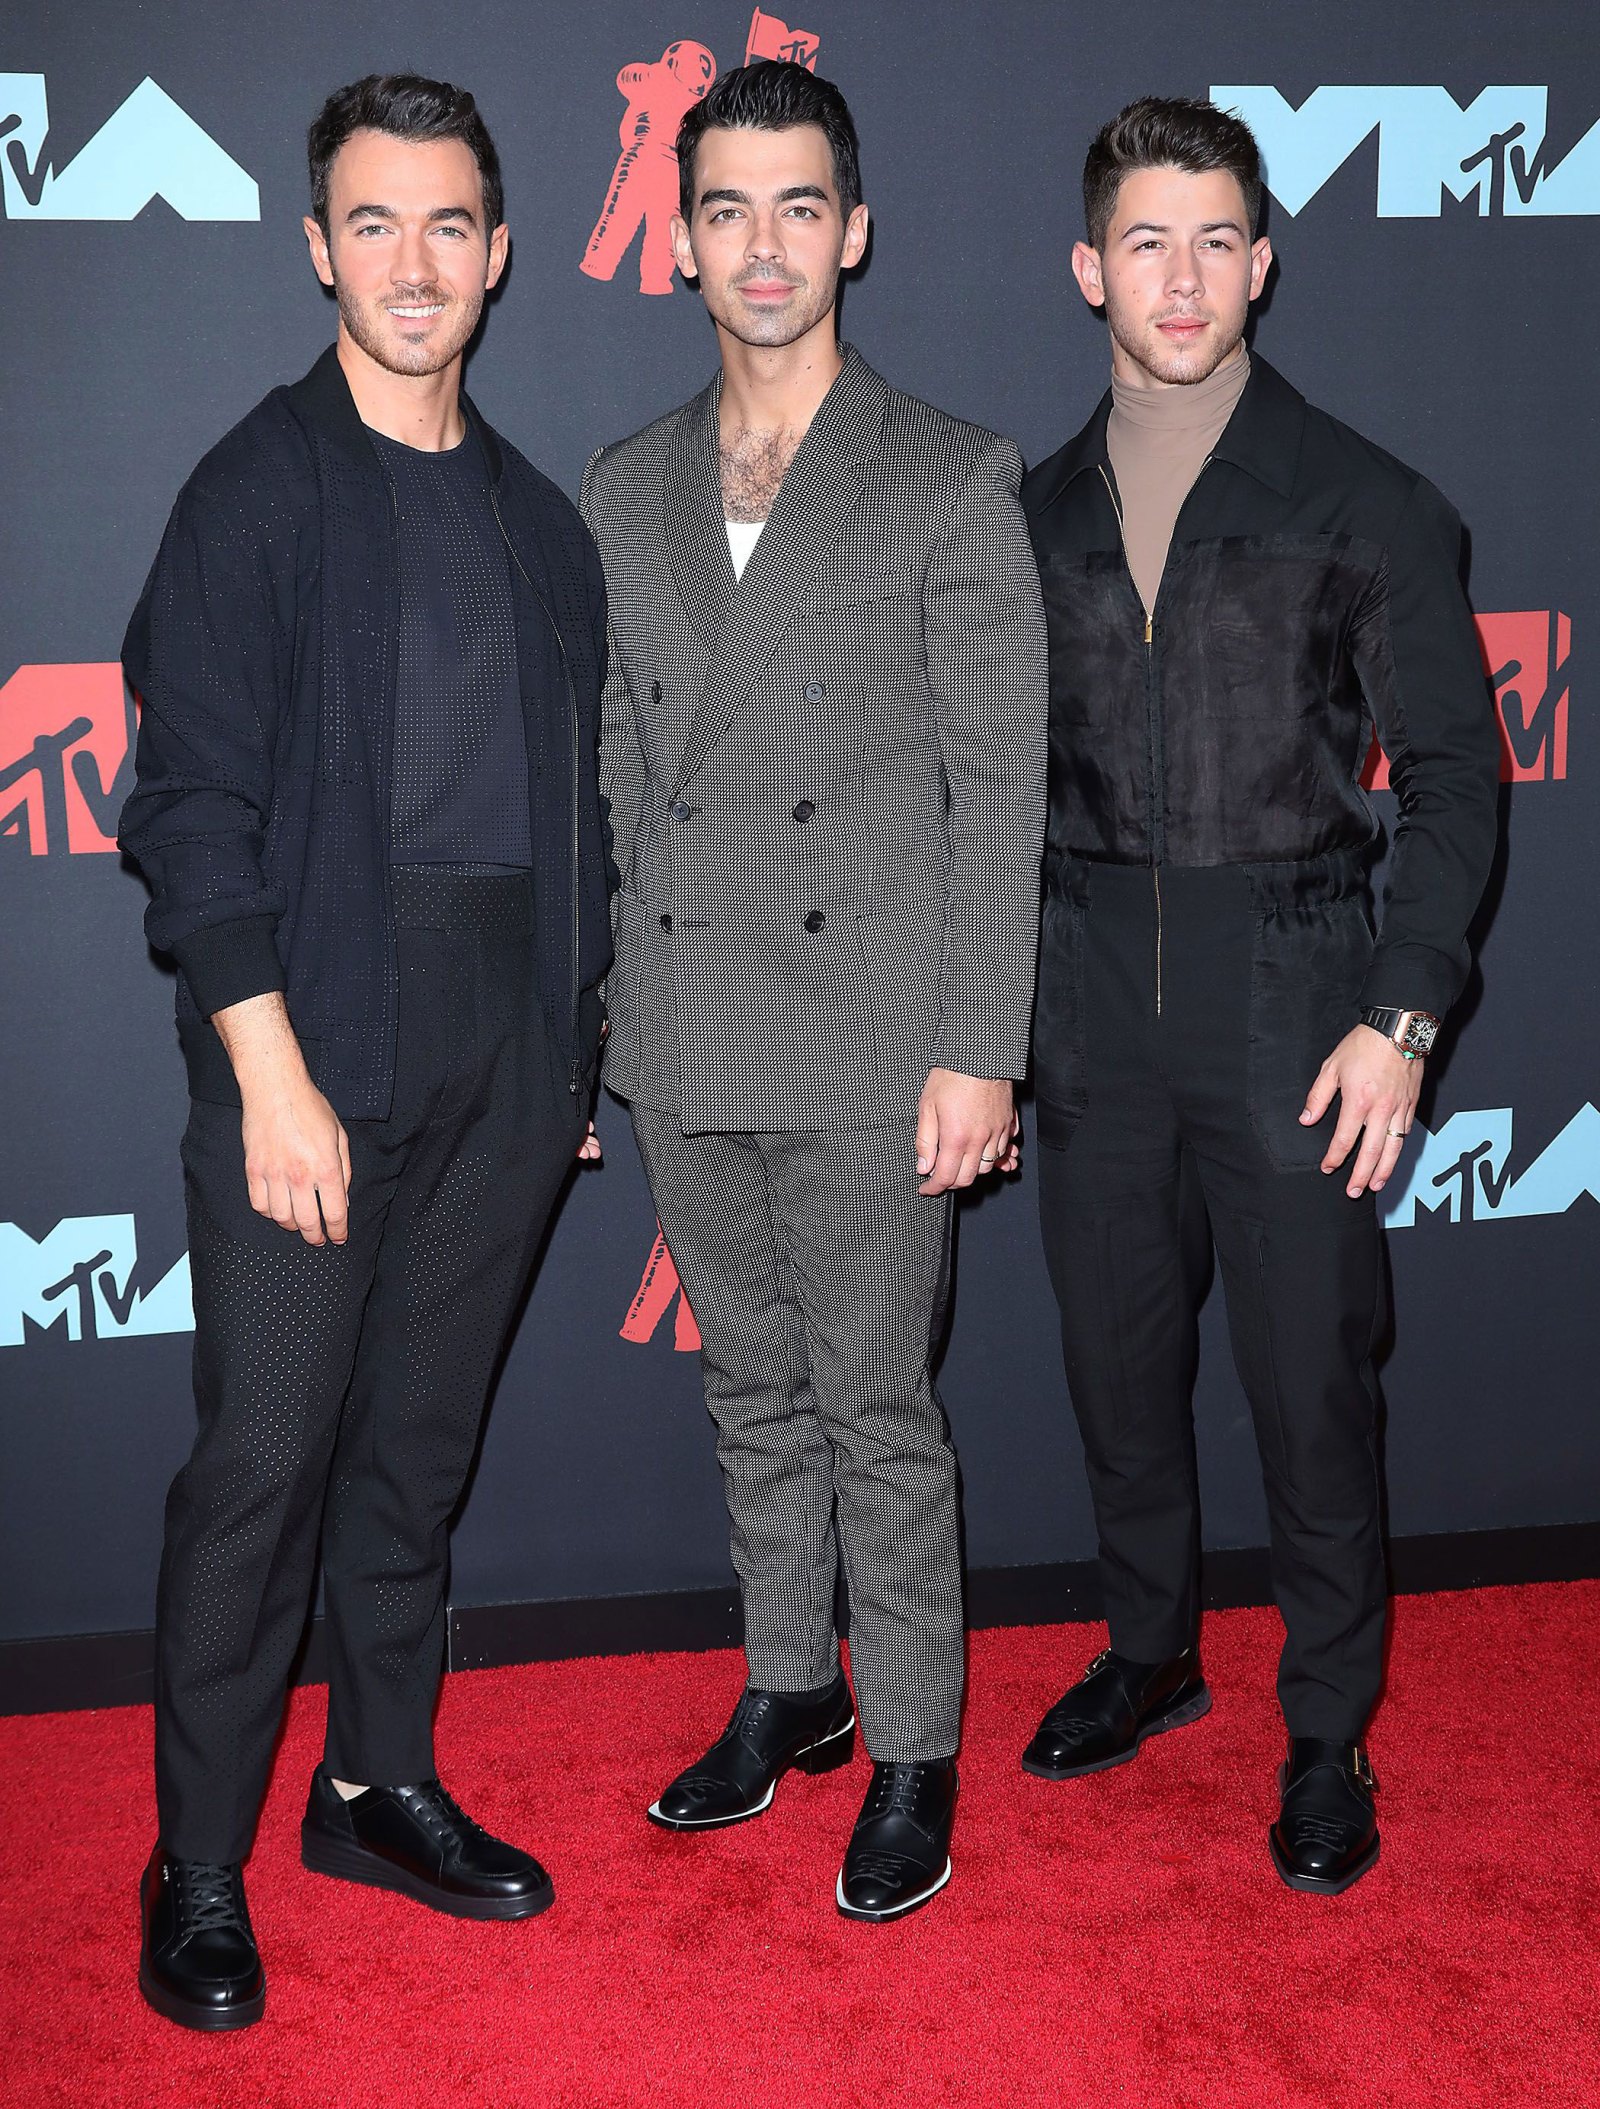 Hottest Hunks VMAS 2019 - The Jonas Brothers